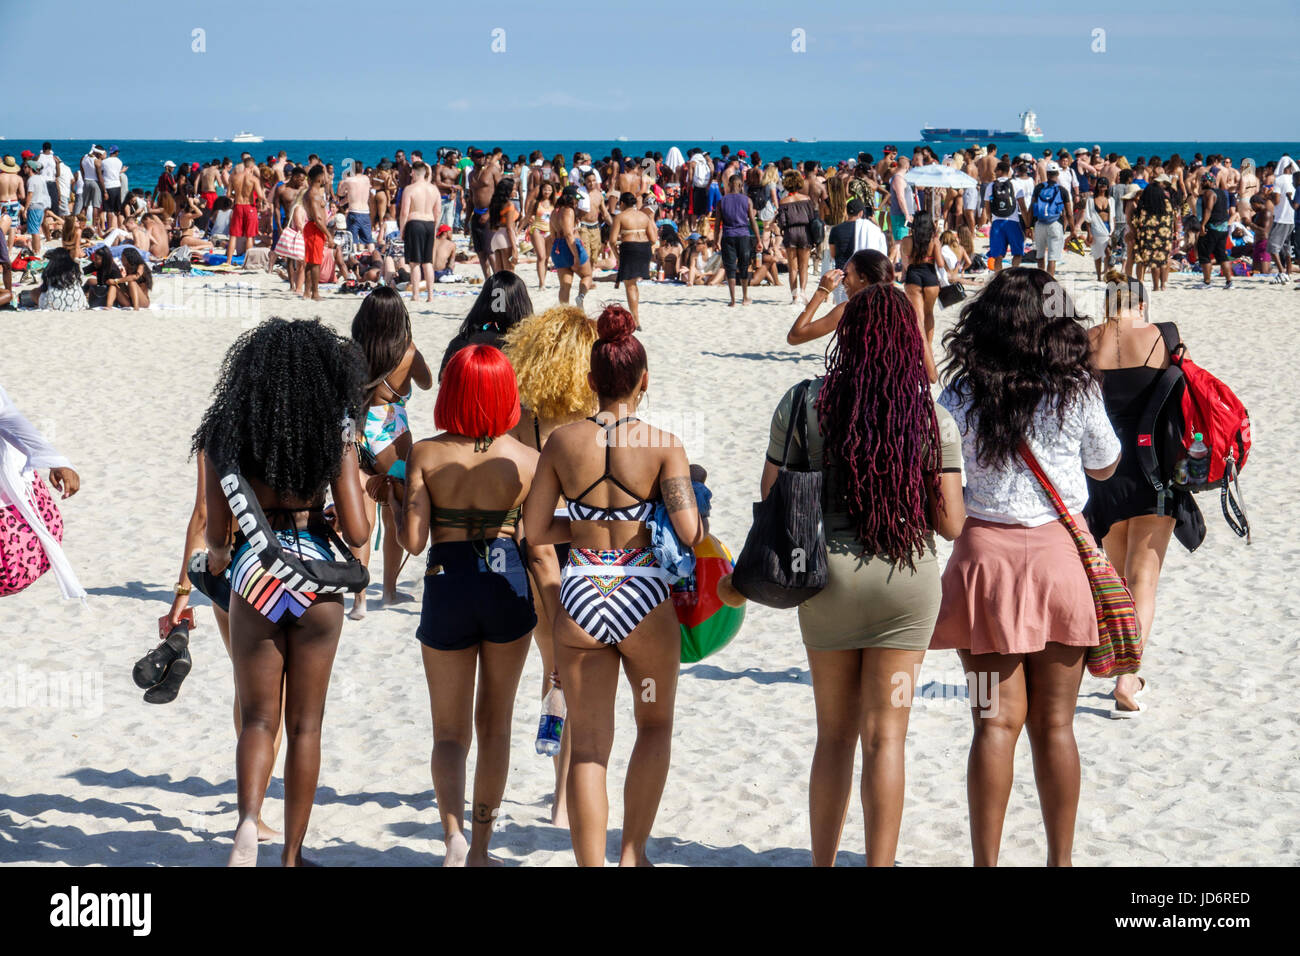 Miami Beach Florida,Atlantic Ocean,Spring Break,sand,Black man men male,woman female women,crowd,young adult,college students,social gathering,urban,b Stock Photo